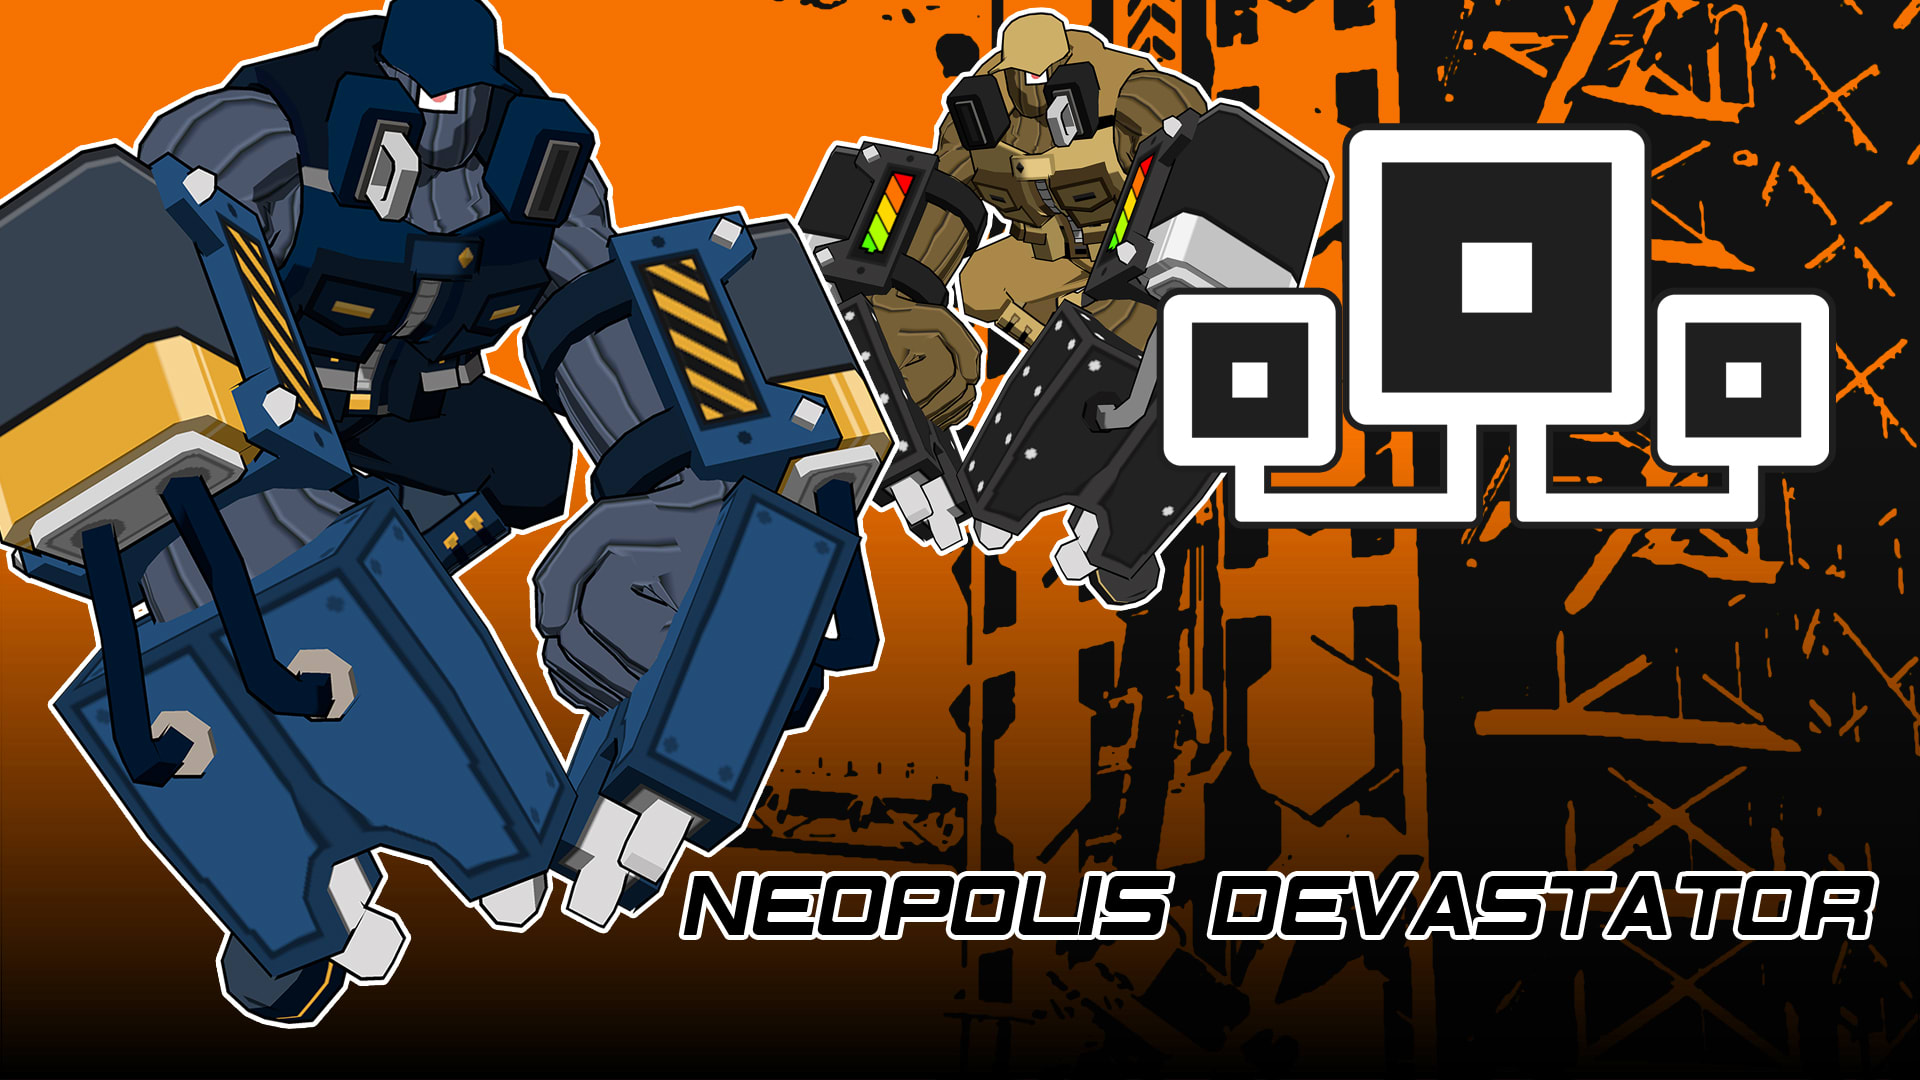 Neopolis Devastator outfit for Grid 1